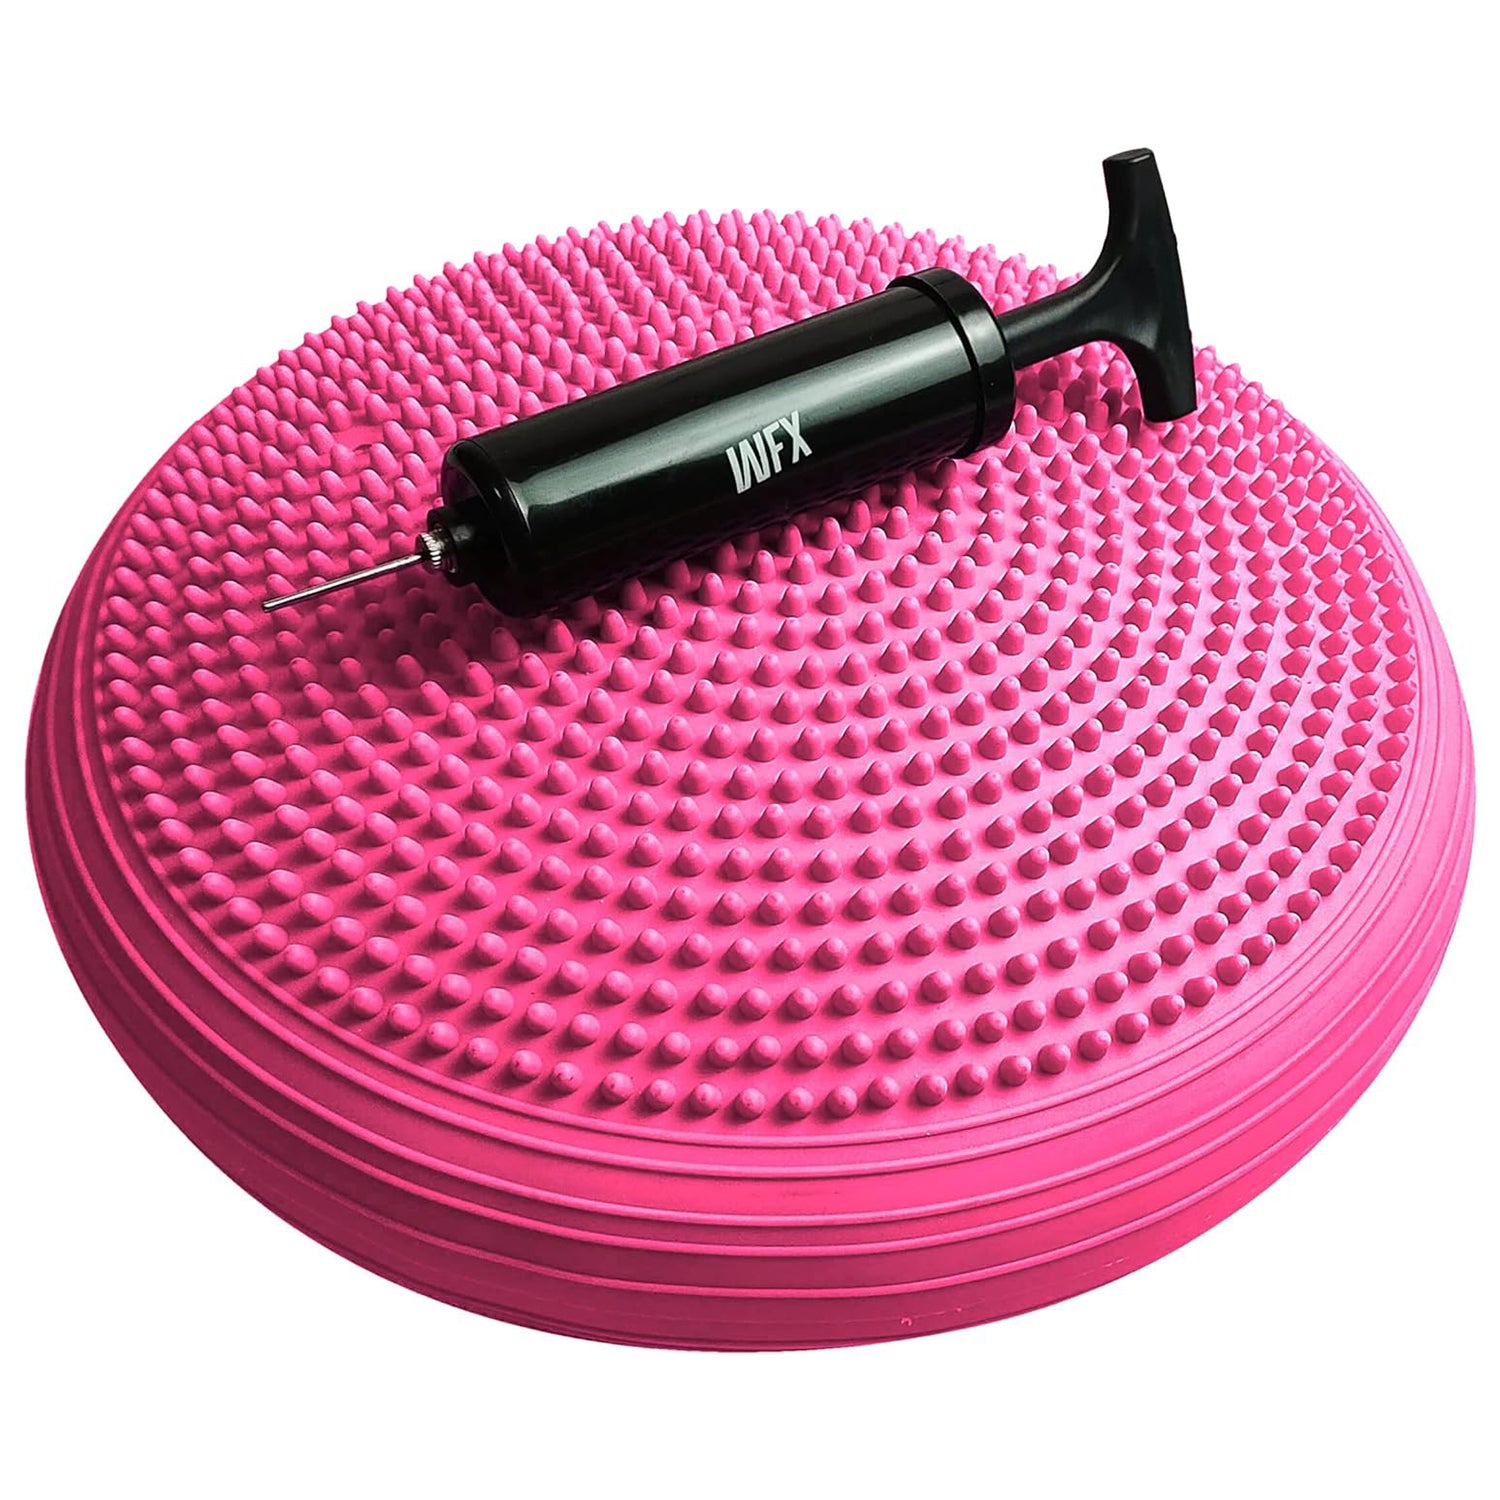 Ballsitzkissen "Blowup" - Inkl. Pumpe  - Ø 33 cm  - Pink